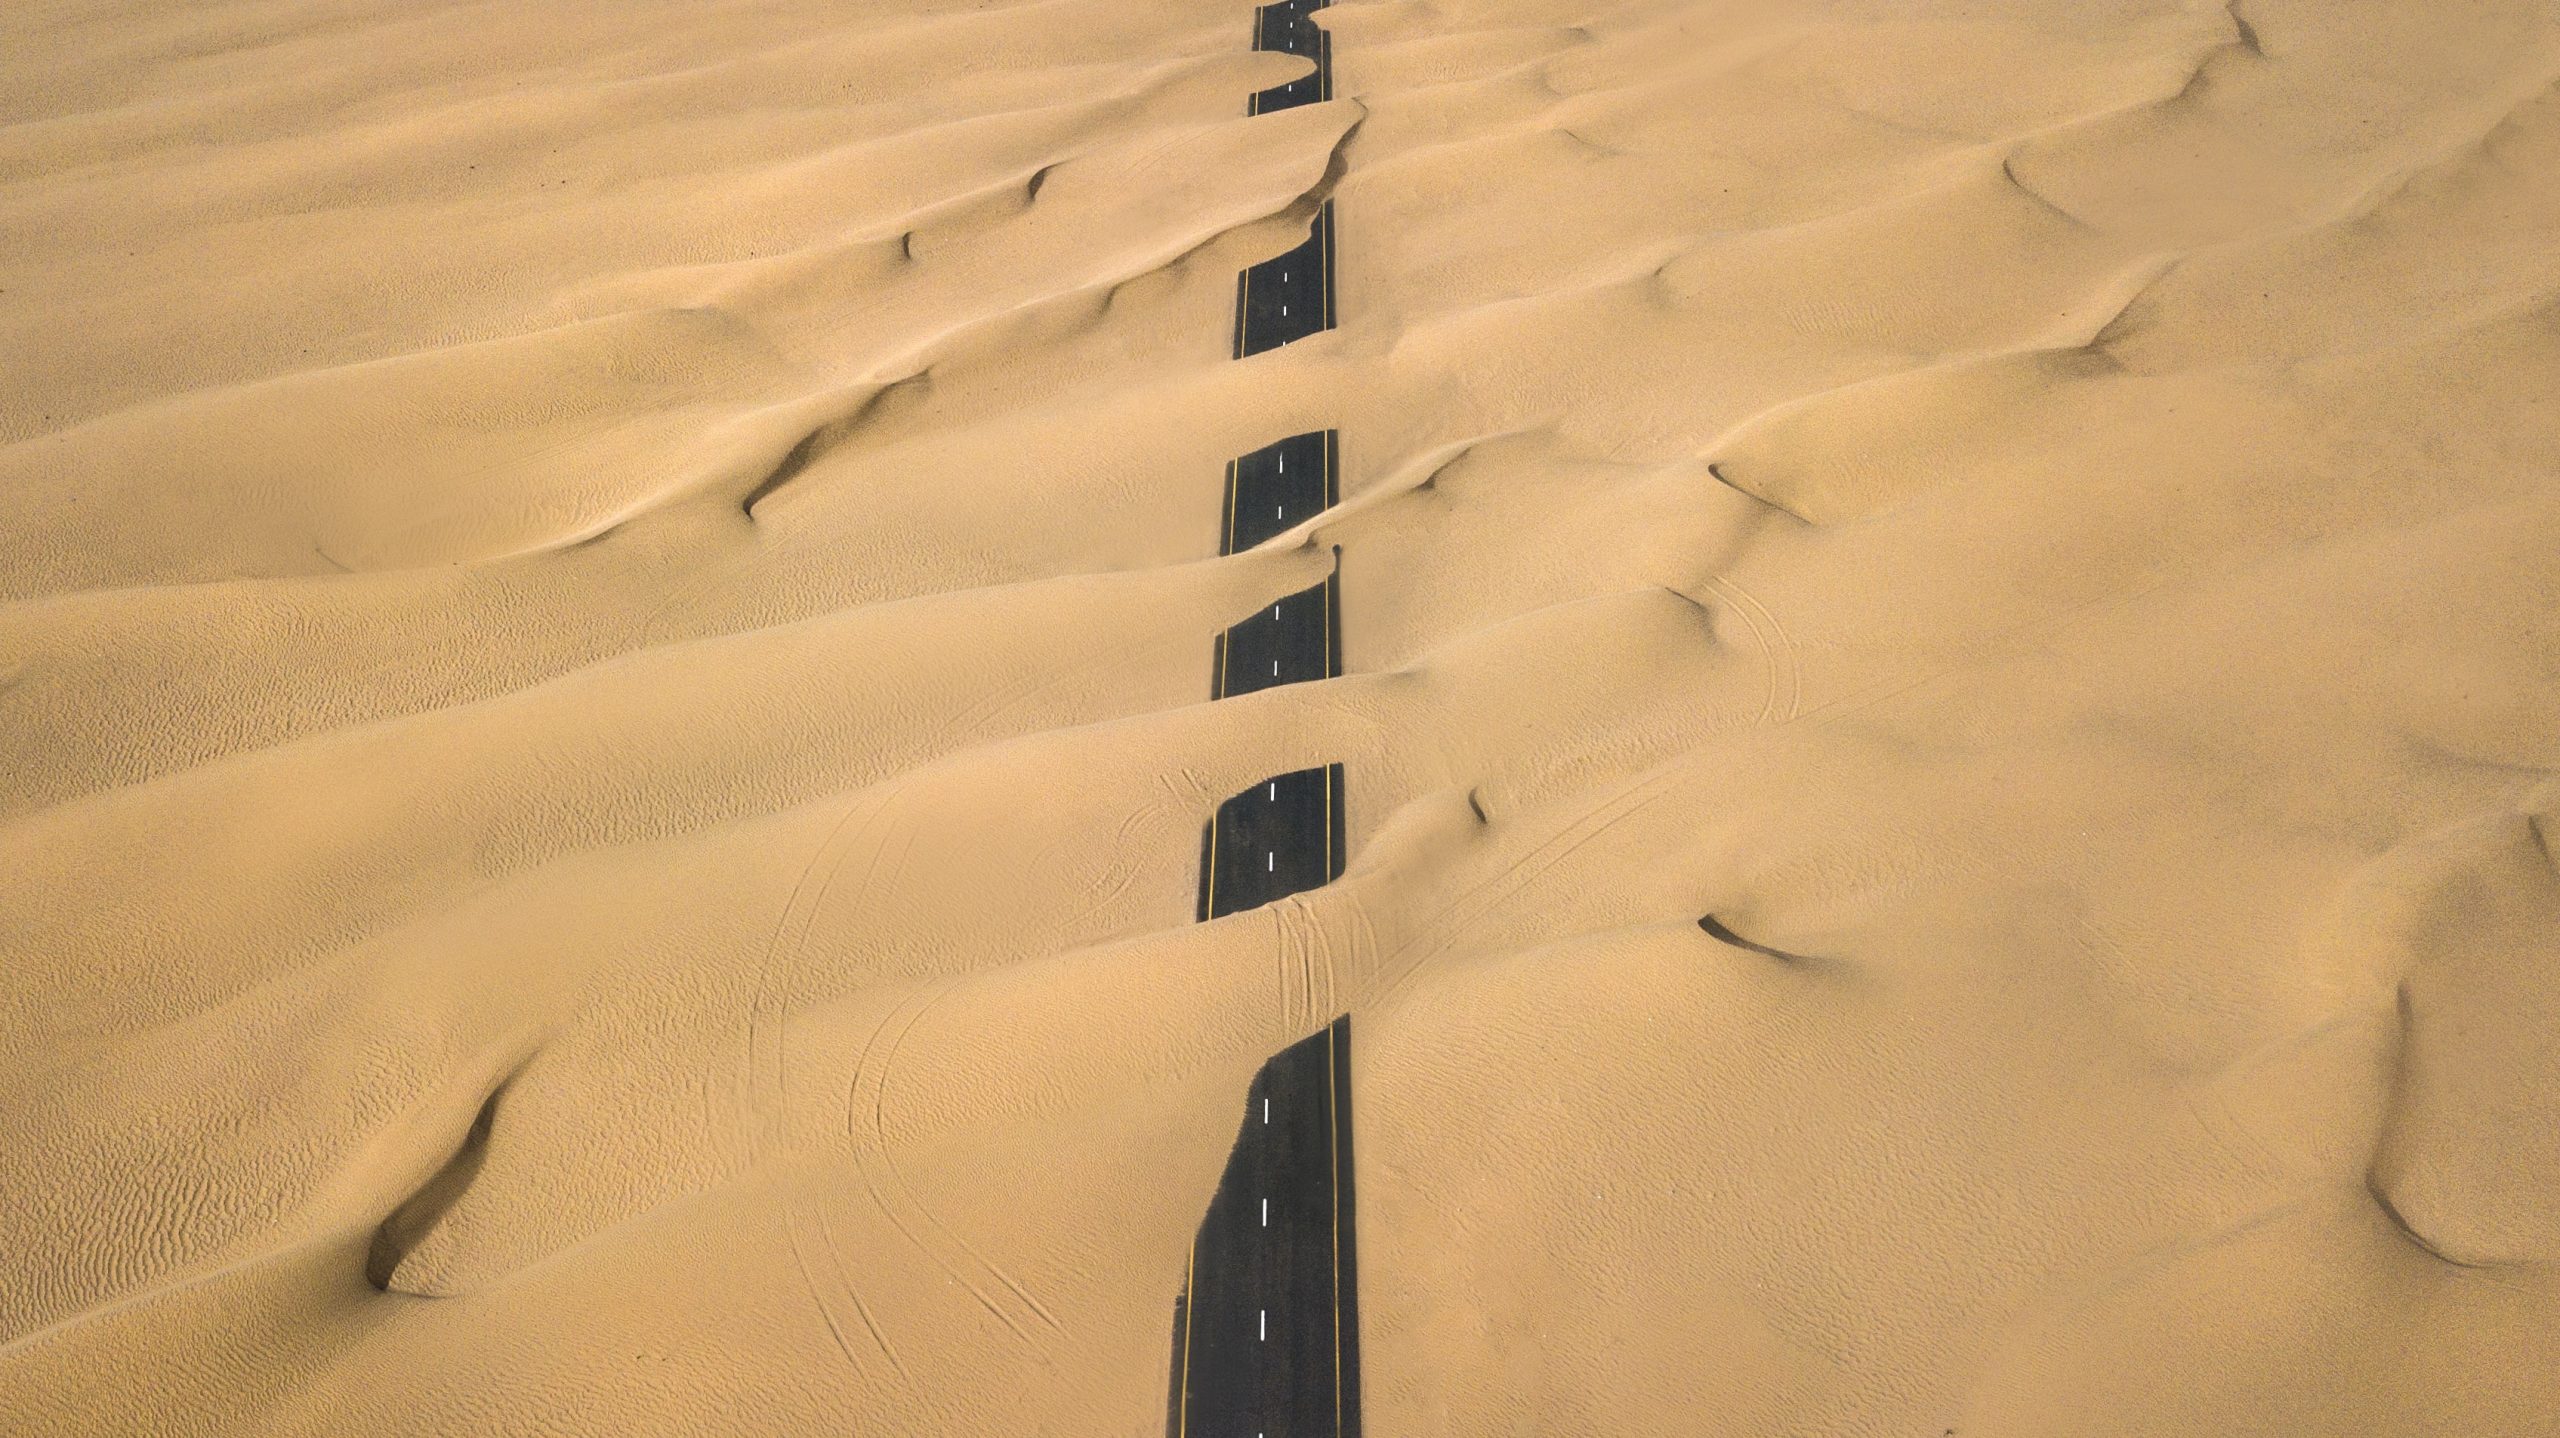 Cesta uprostred púšte